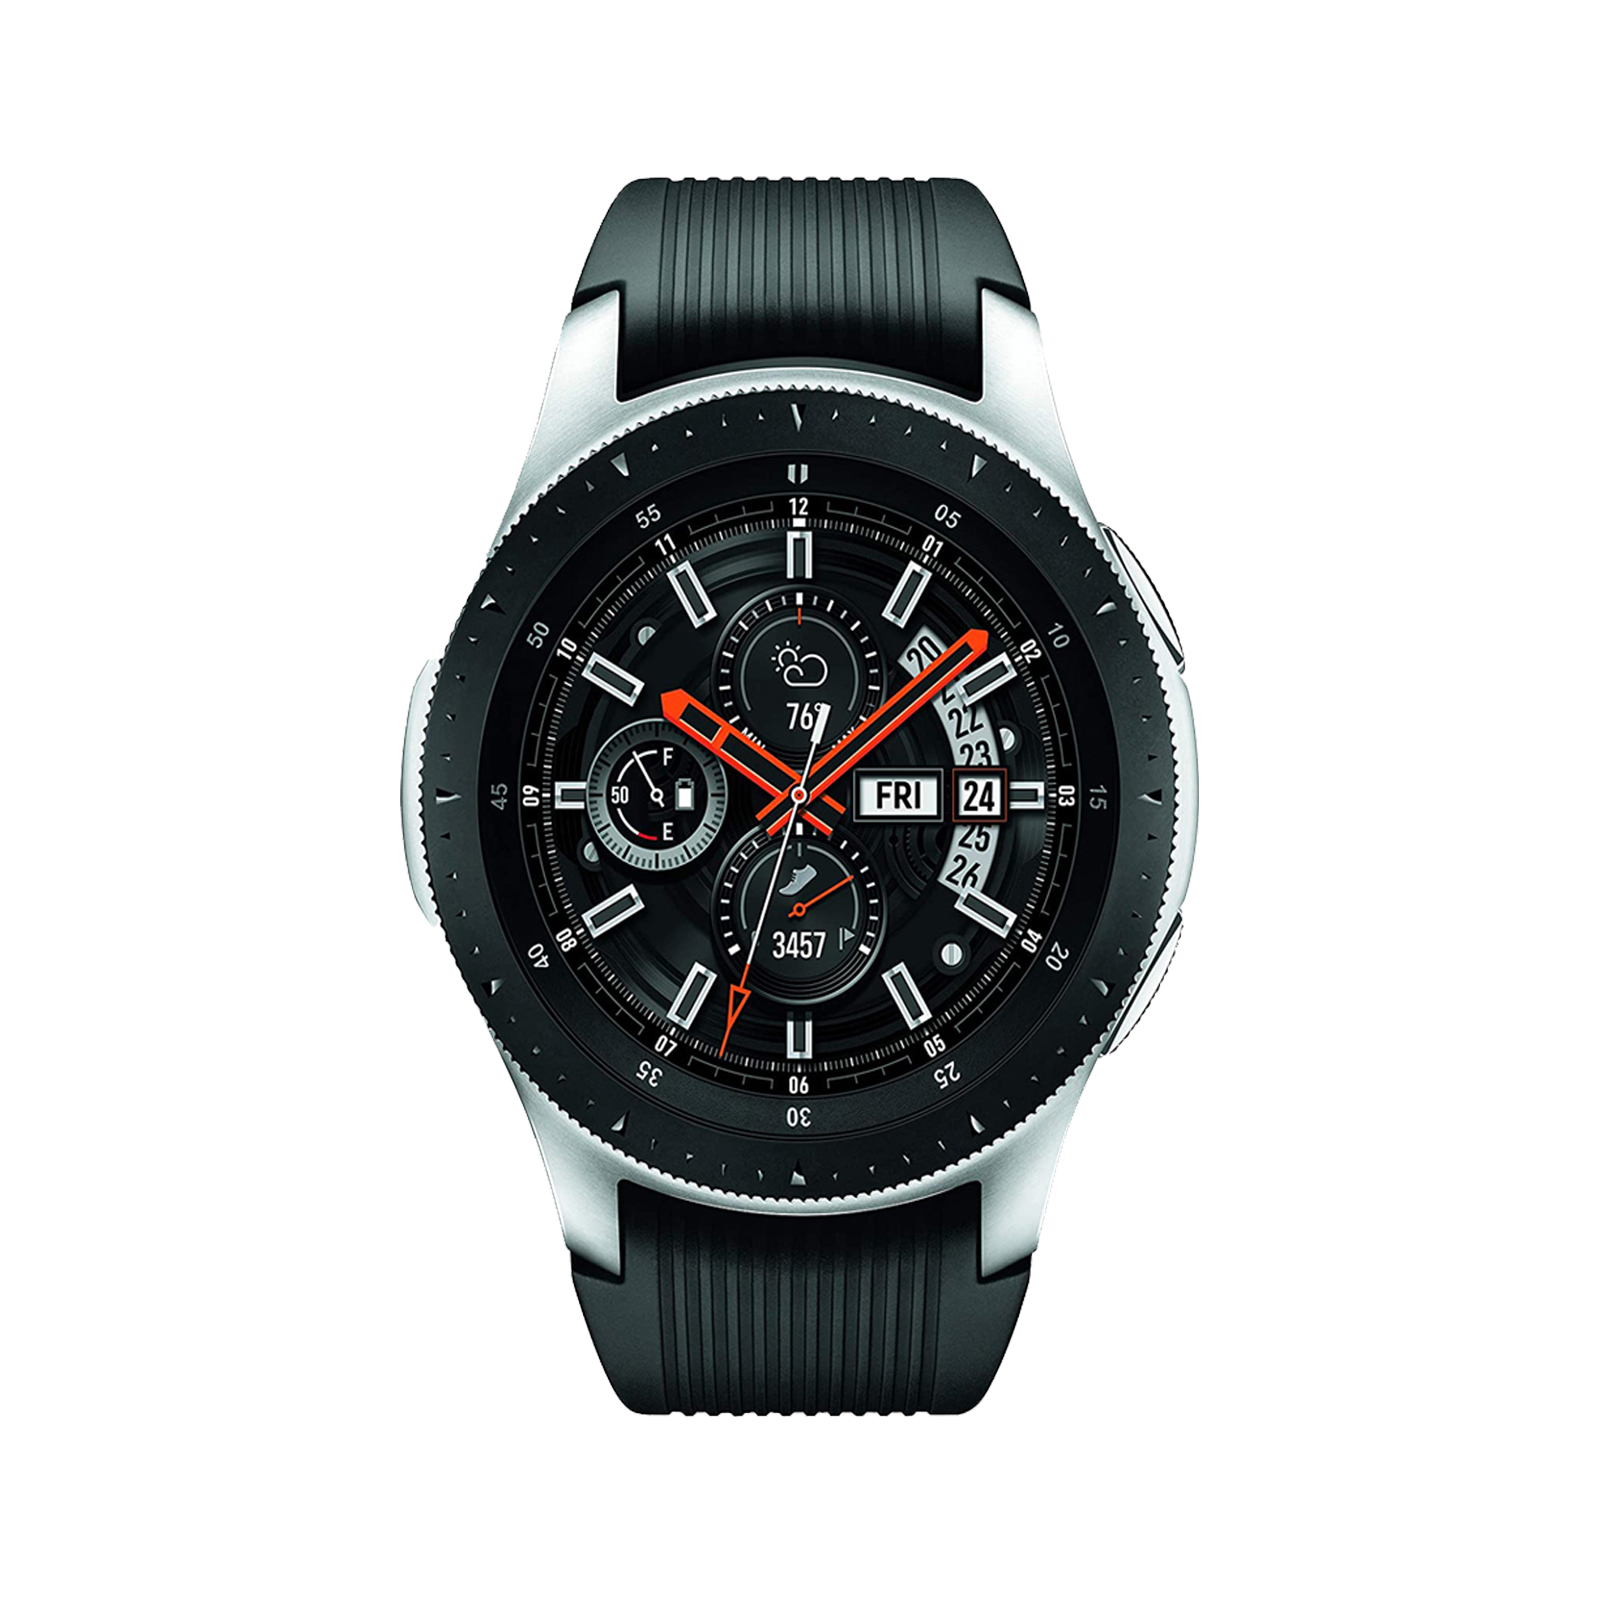 Samsung Galaxy Watch 4G 46mm - Brand New